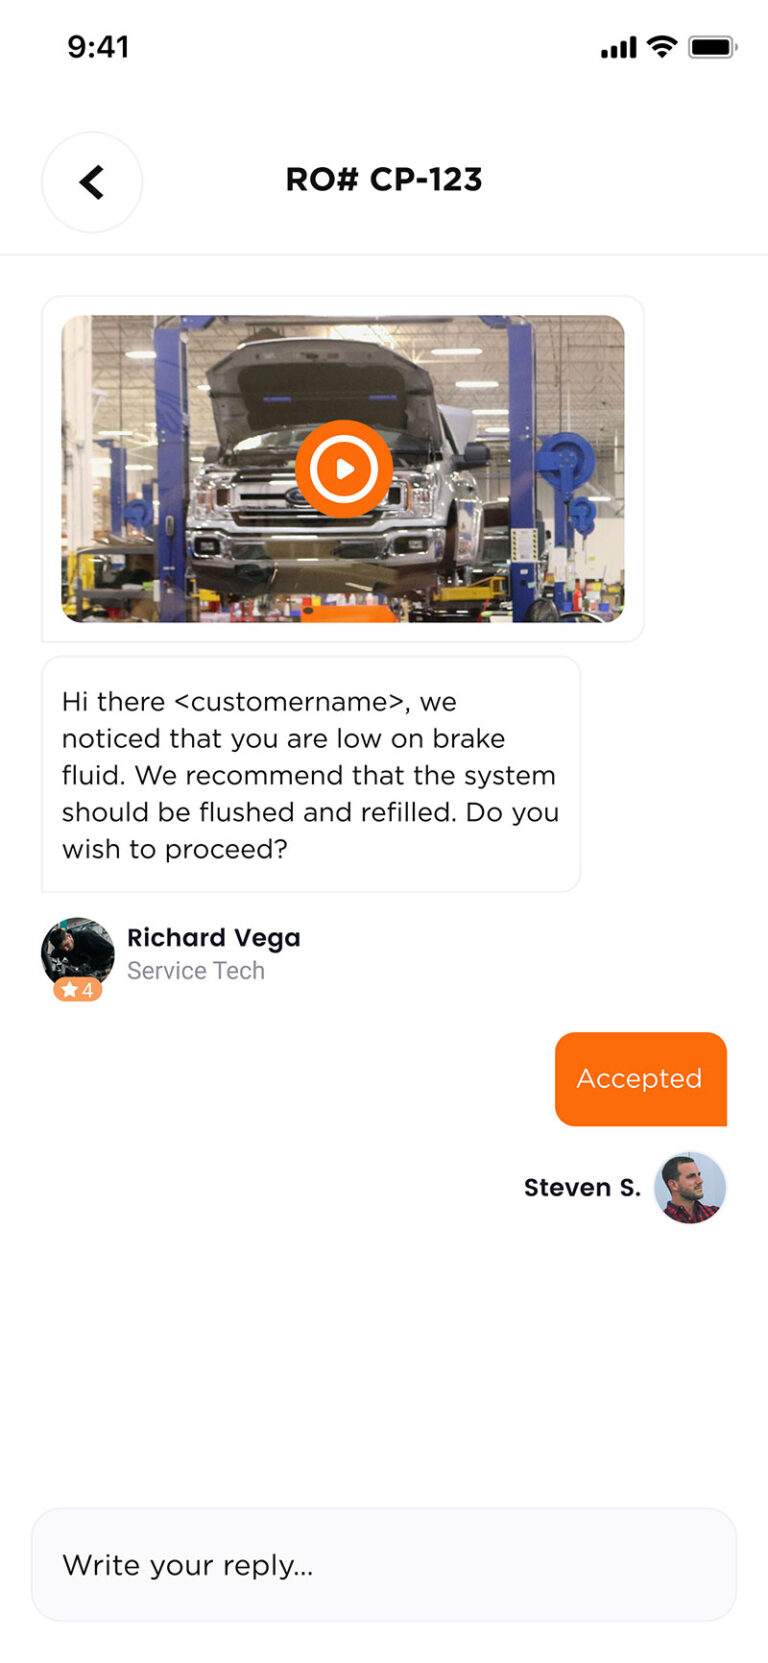 Repair order chat between customer and technician